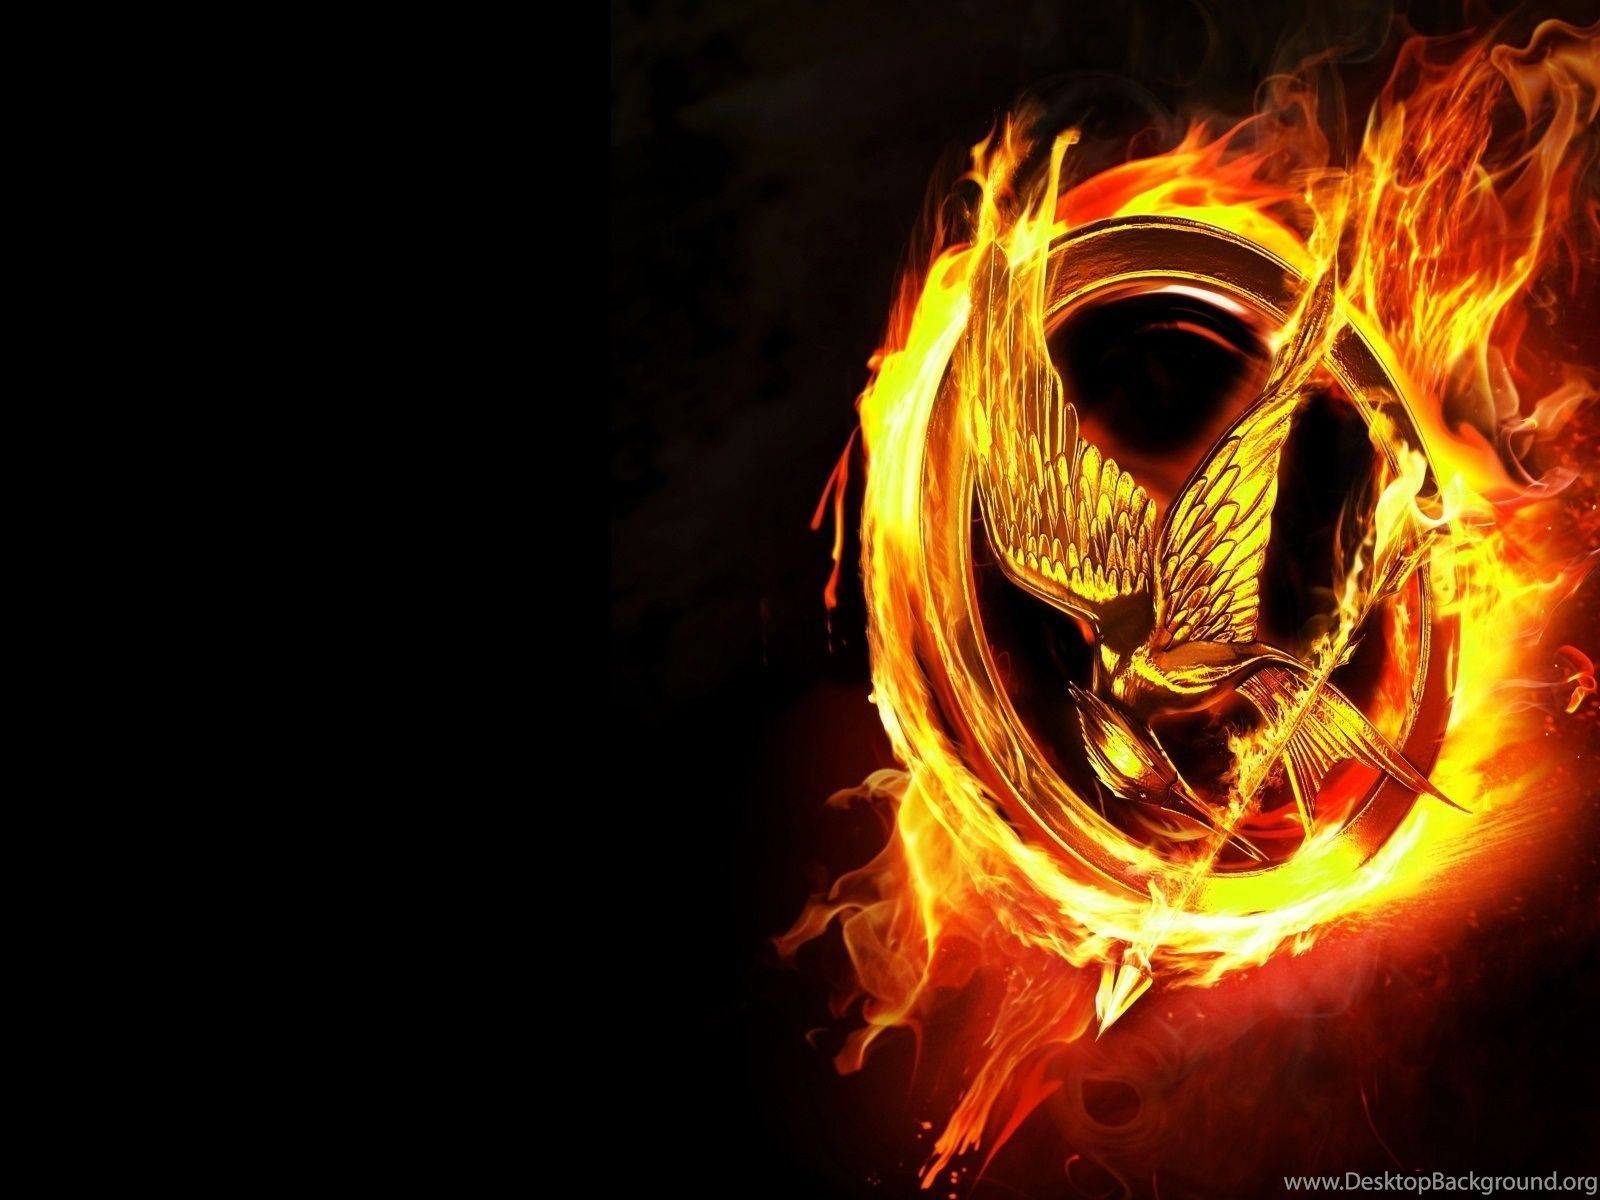 The Hunger Games Desktop Wallpaper, New Wallpaper, New